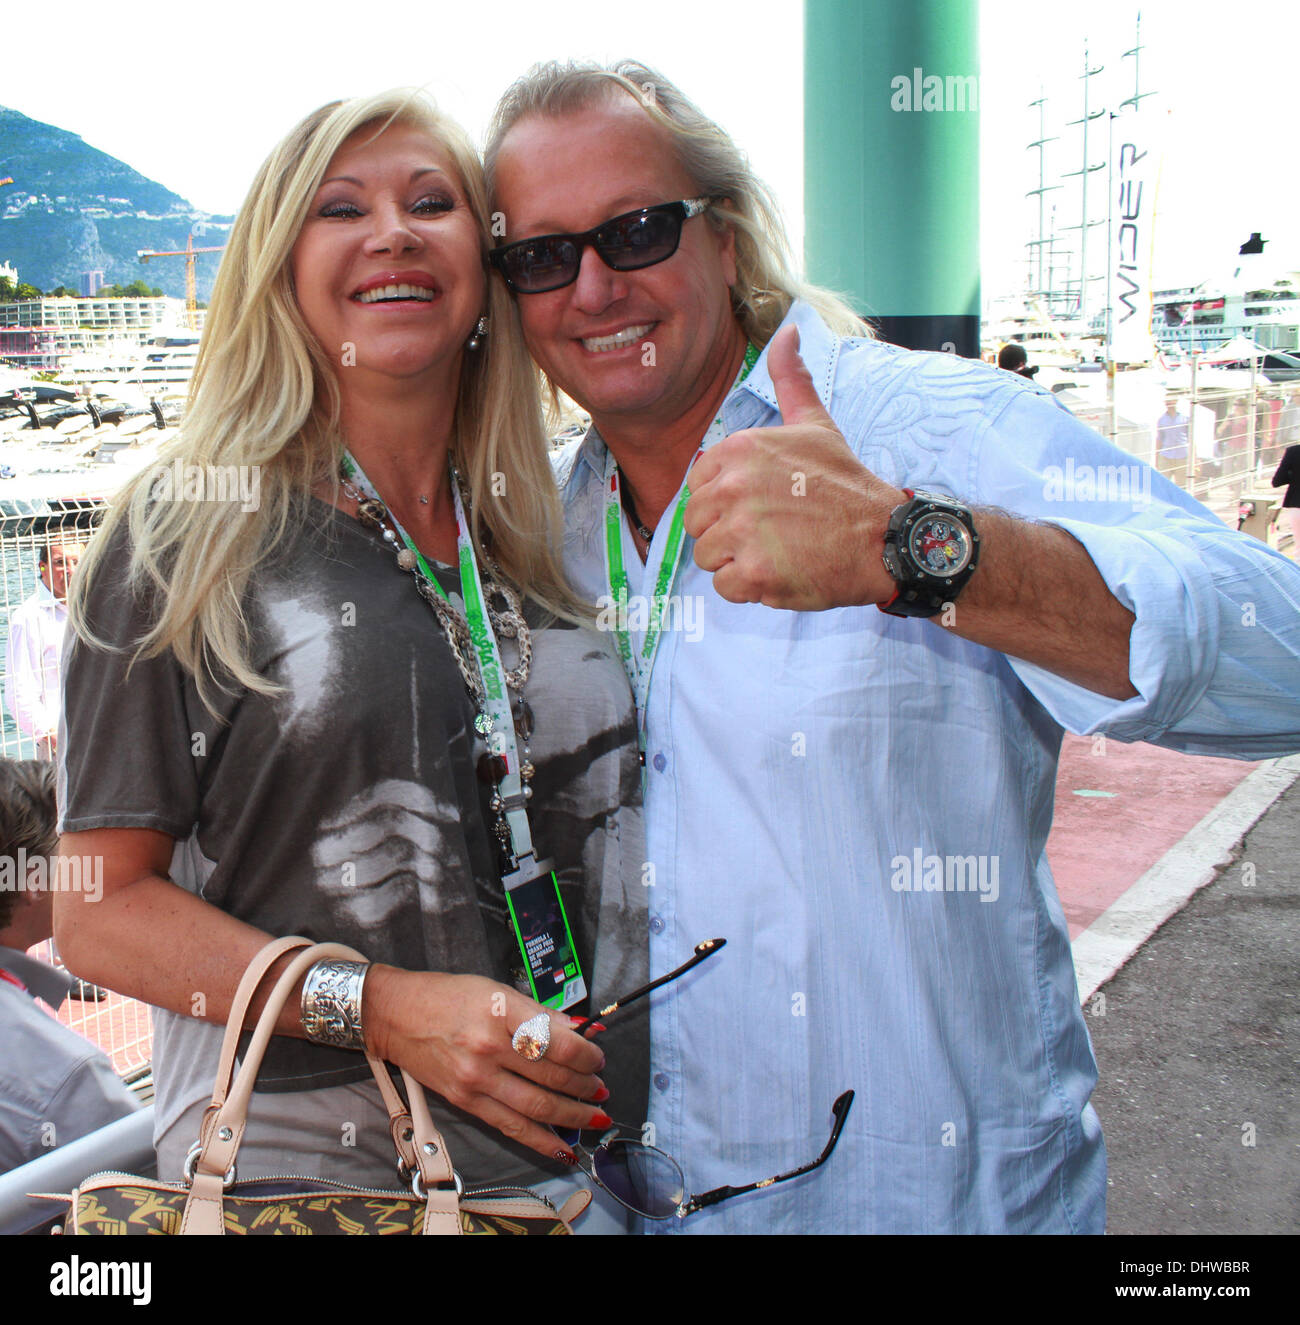 Robert Geiss and Carmen Geiss Formula One 2012 season - F1 Monaco Grand  Prix - held at Circuit de Monaco - Celebrities Monte Carlo, Monaco -  27.05.12 Stock Photo - Alamy